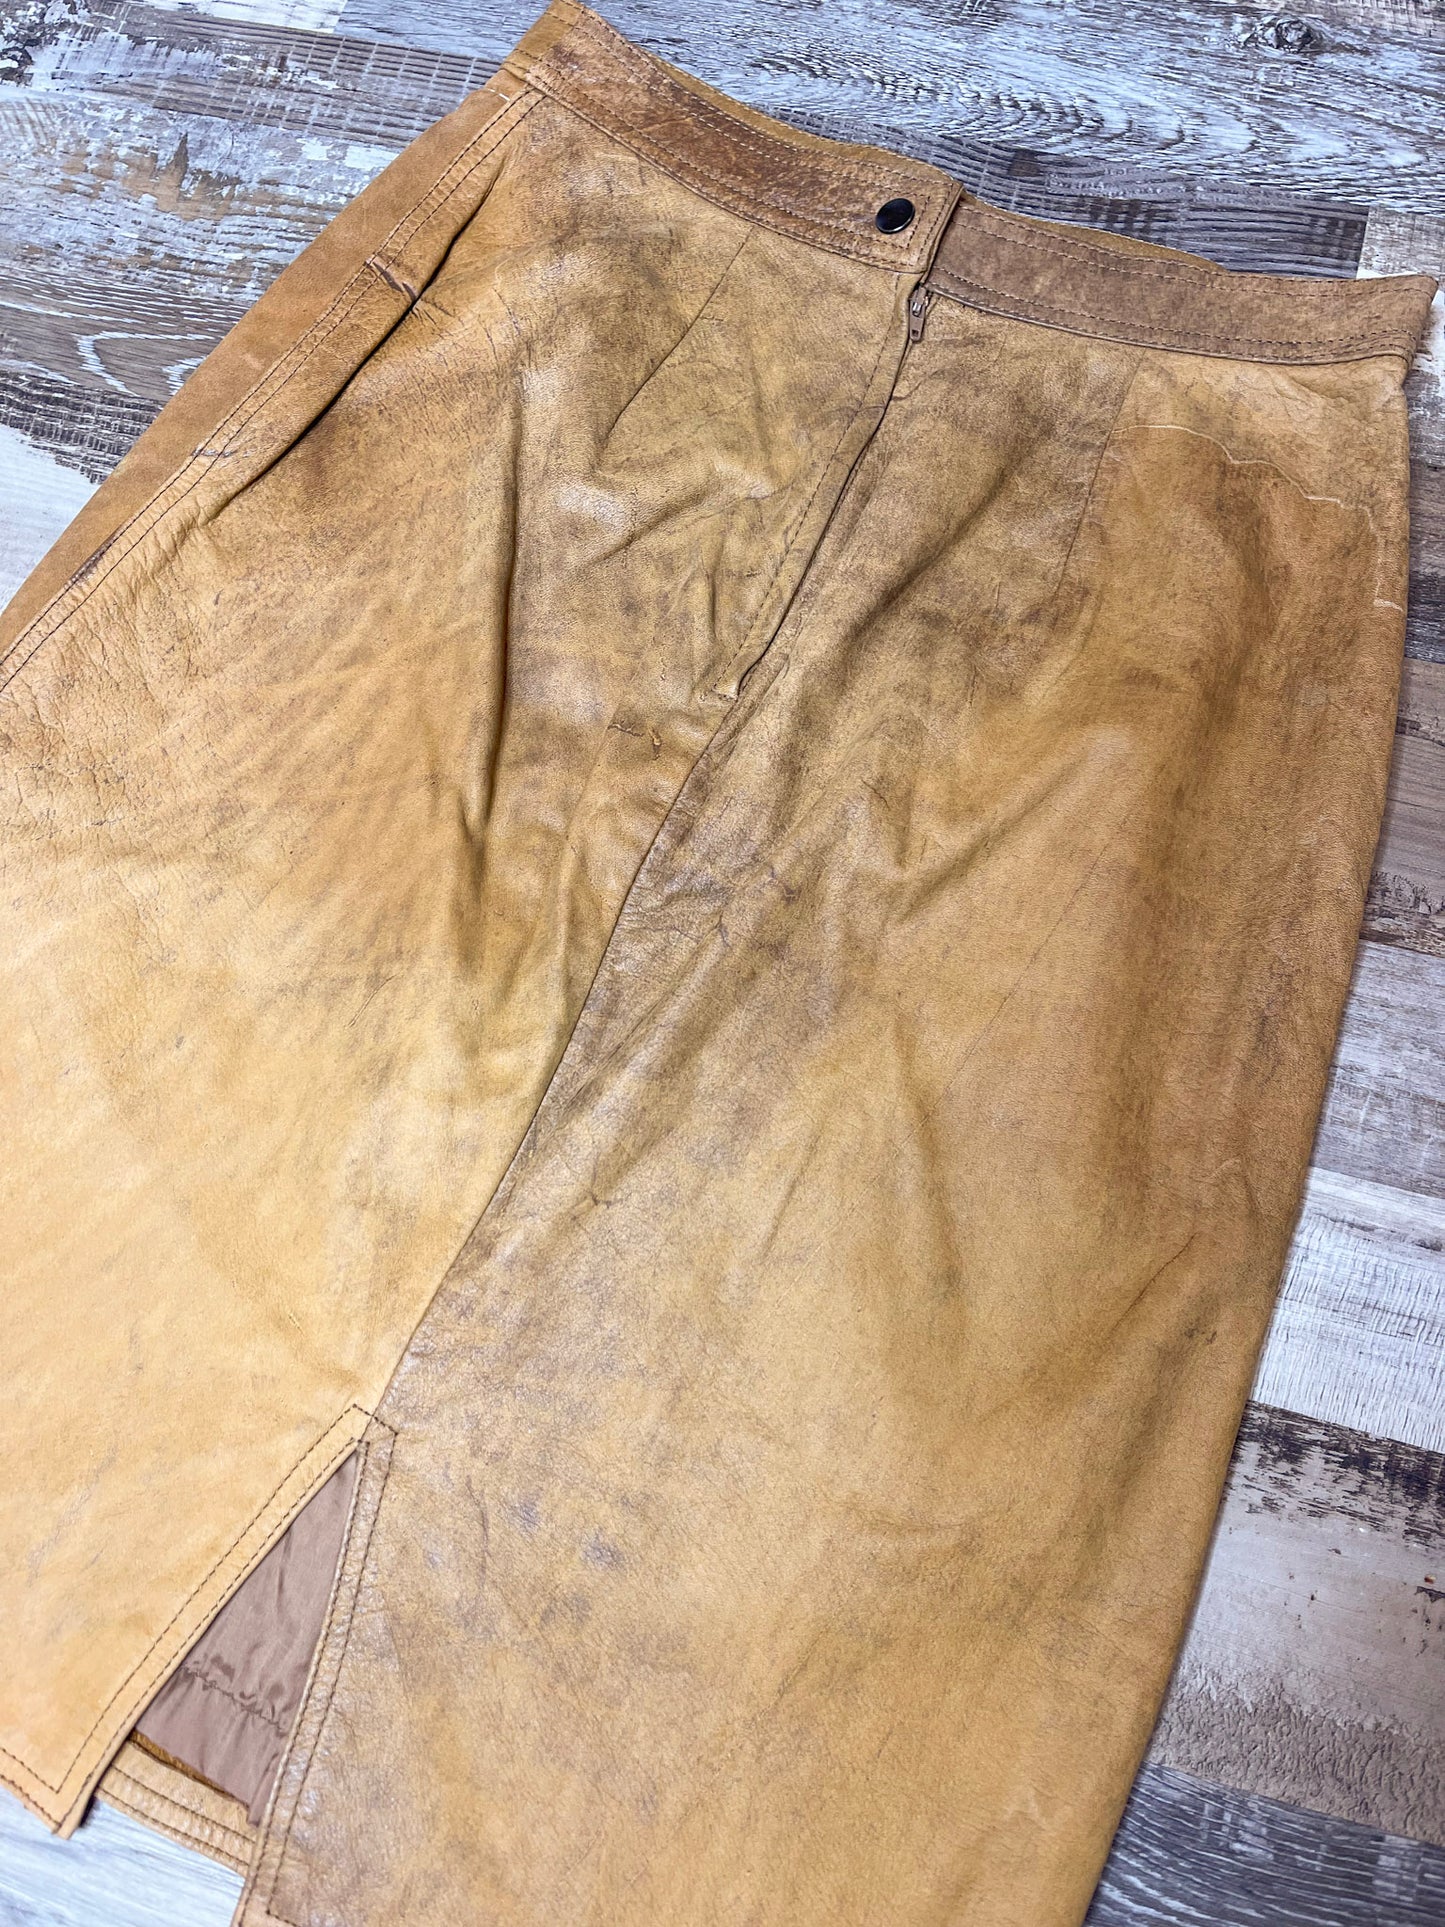 Brown Leather Midi Skirt